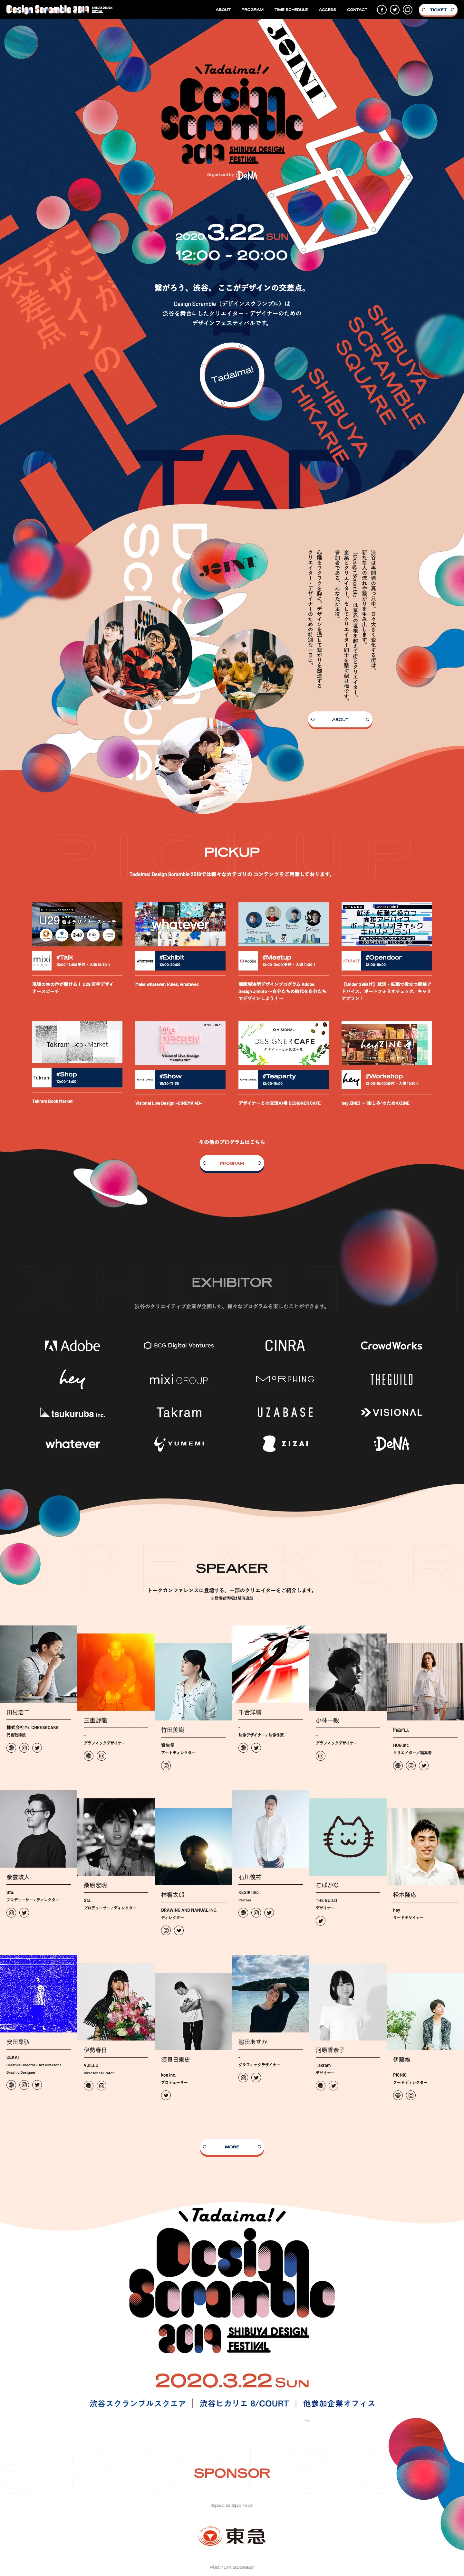 Design Scramble Landing Page Example: Shibuya design festival